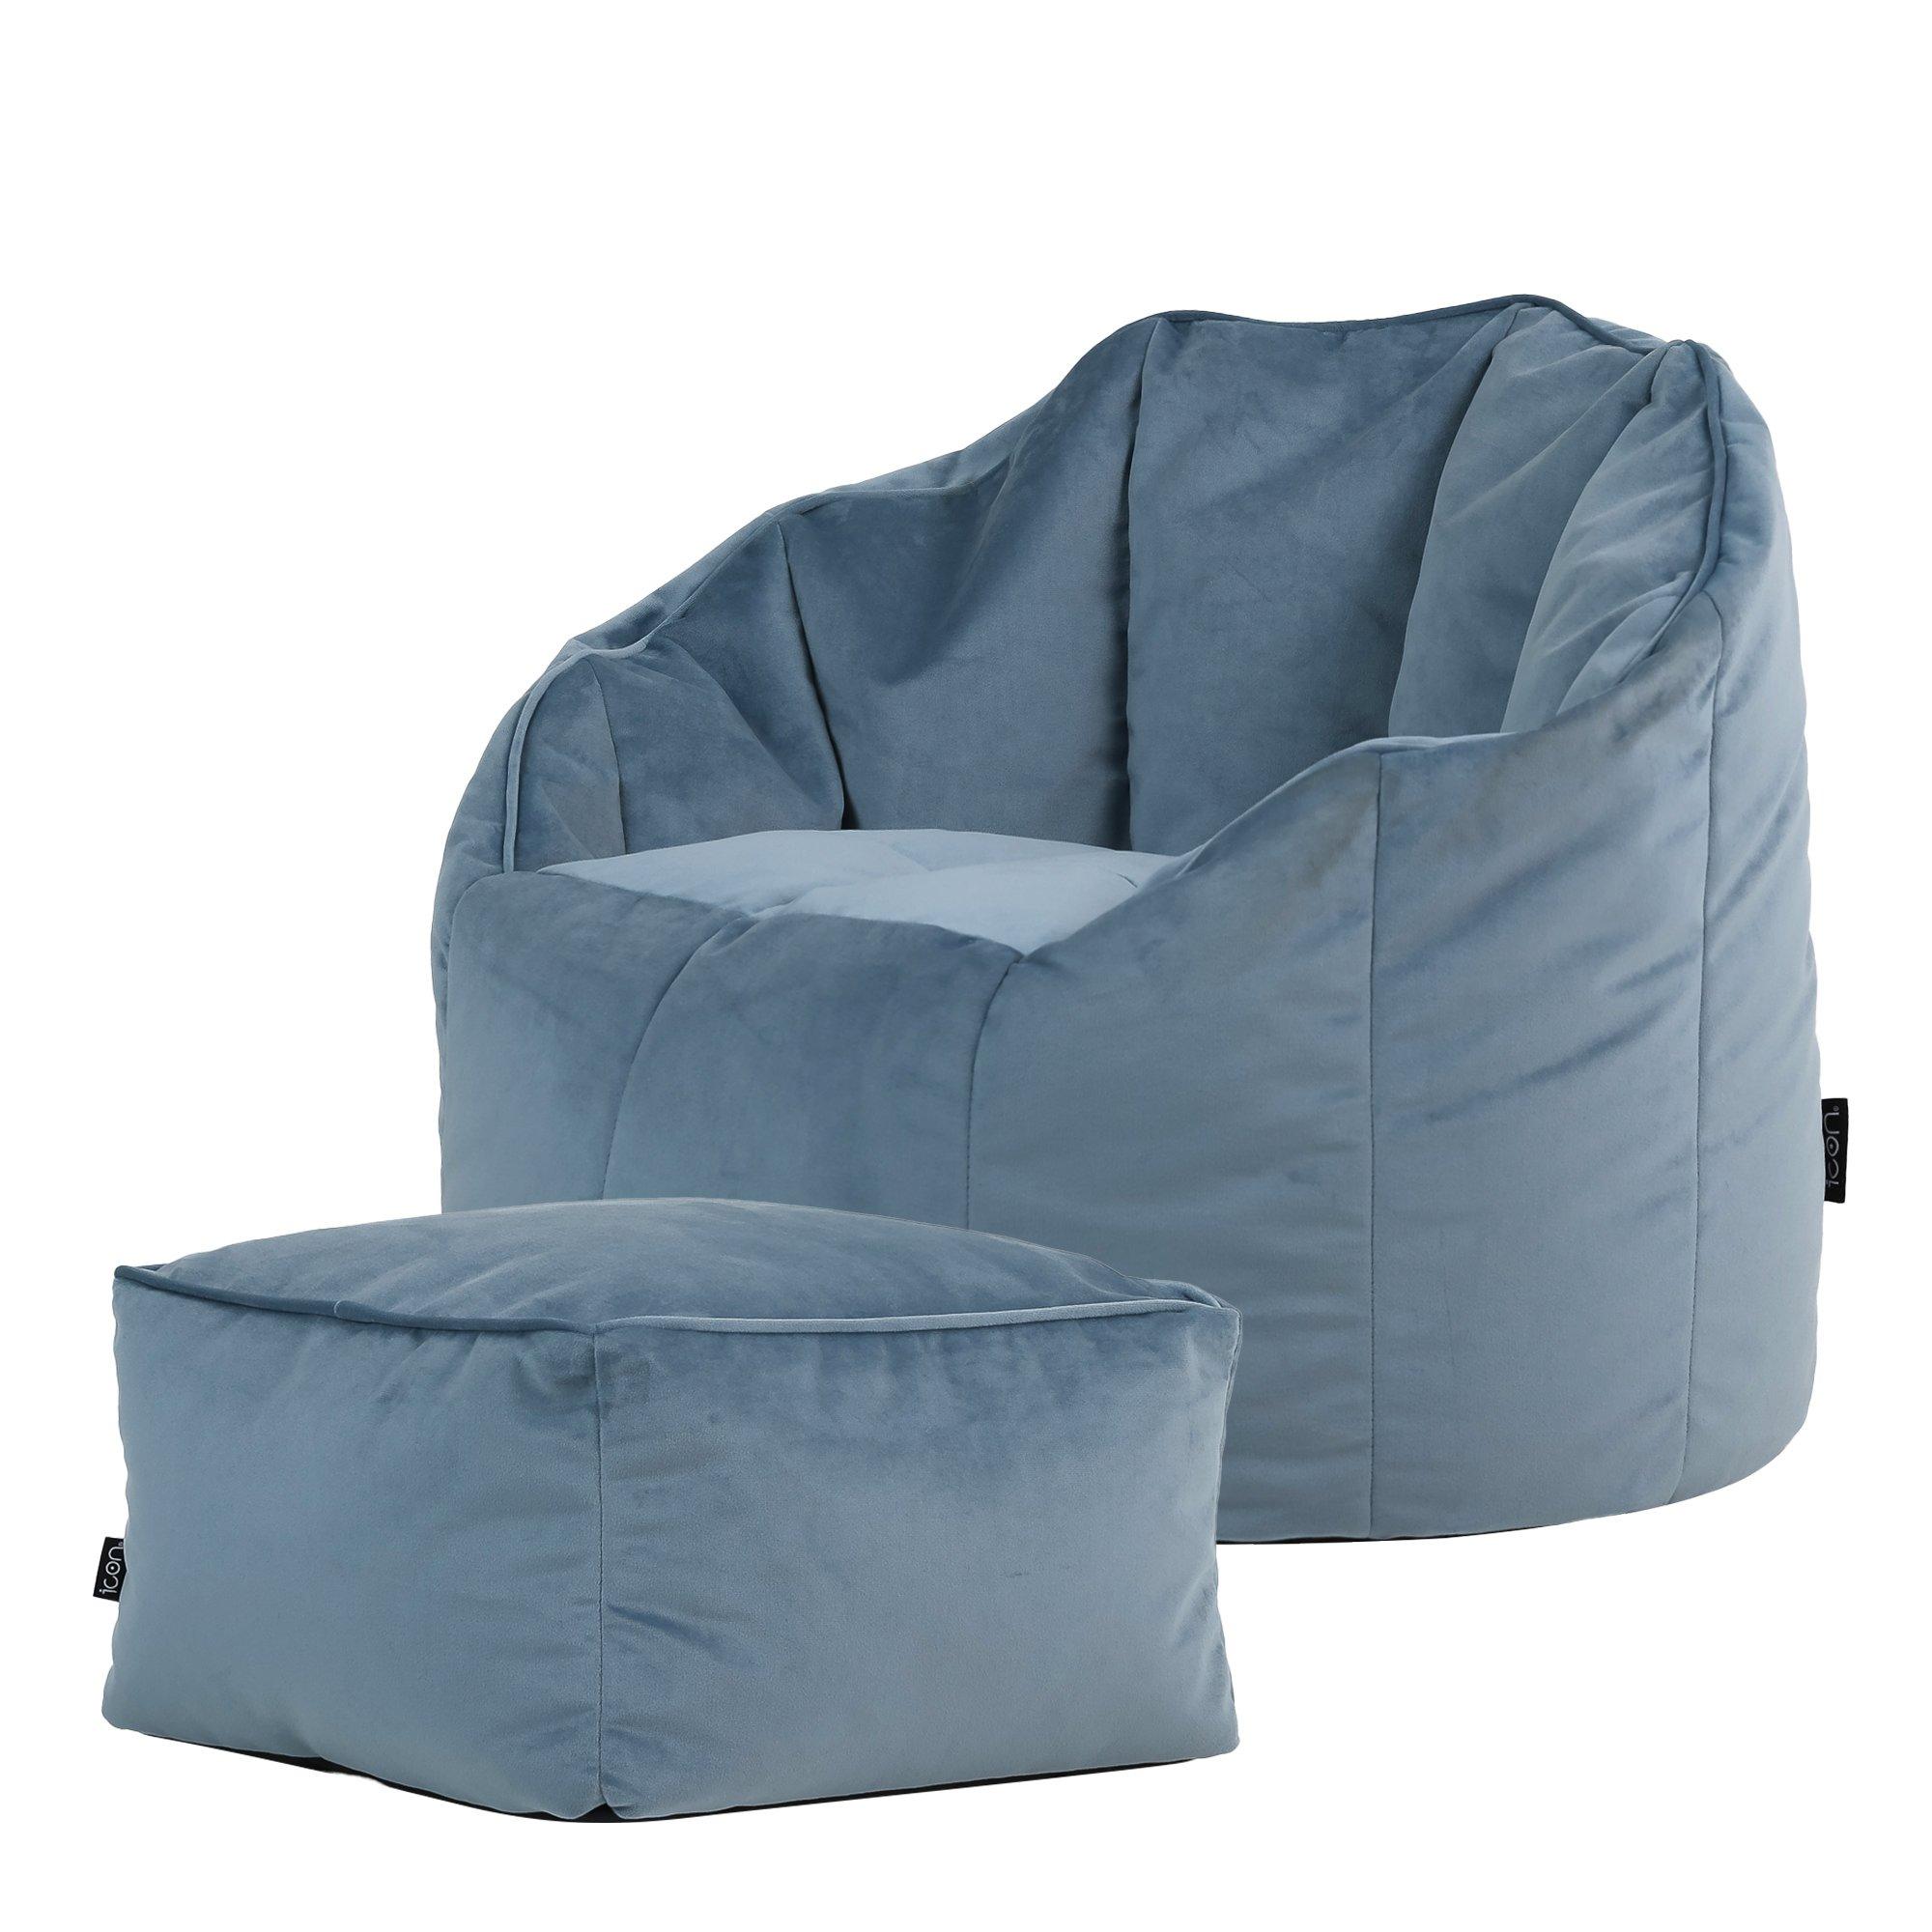 Sirena Scallop Chair Bean Bag and Footstool Velvet Bean Bags